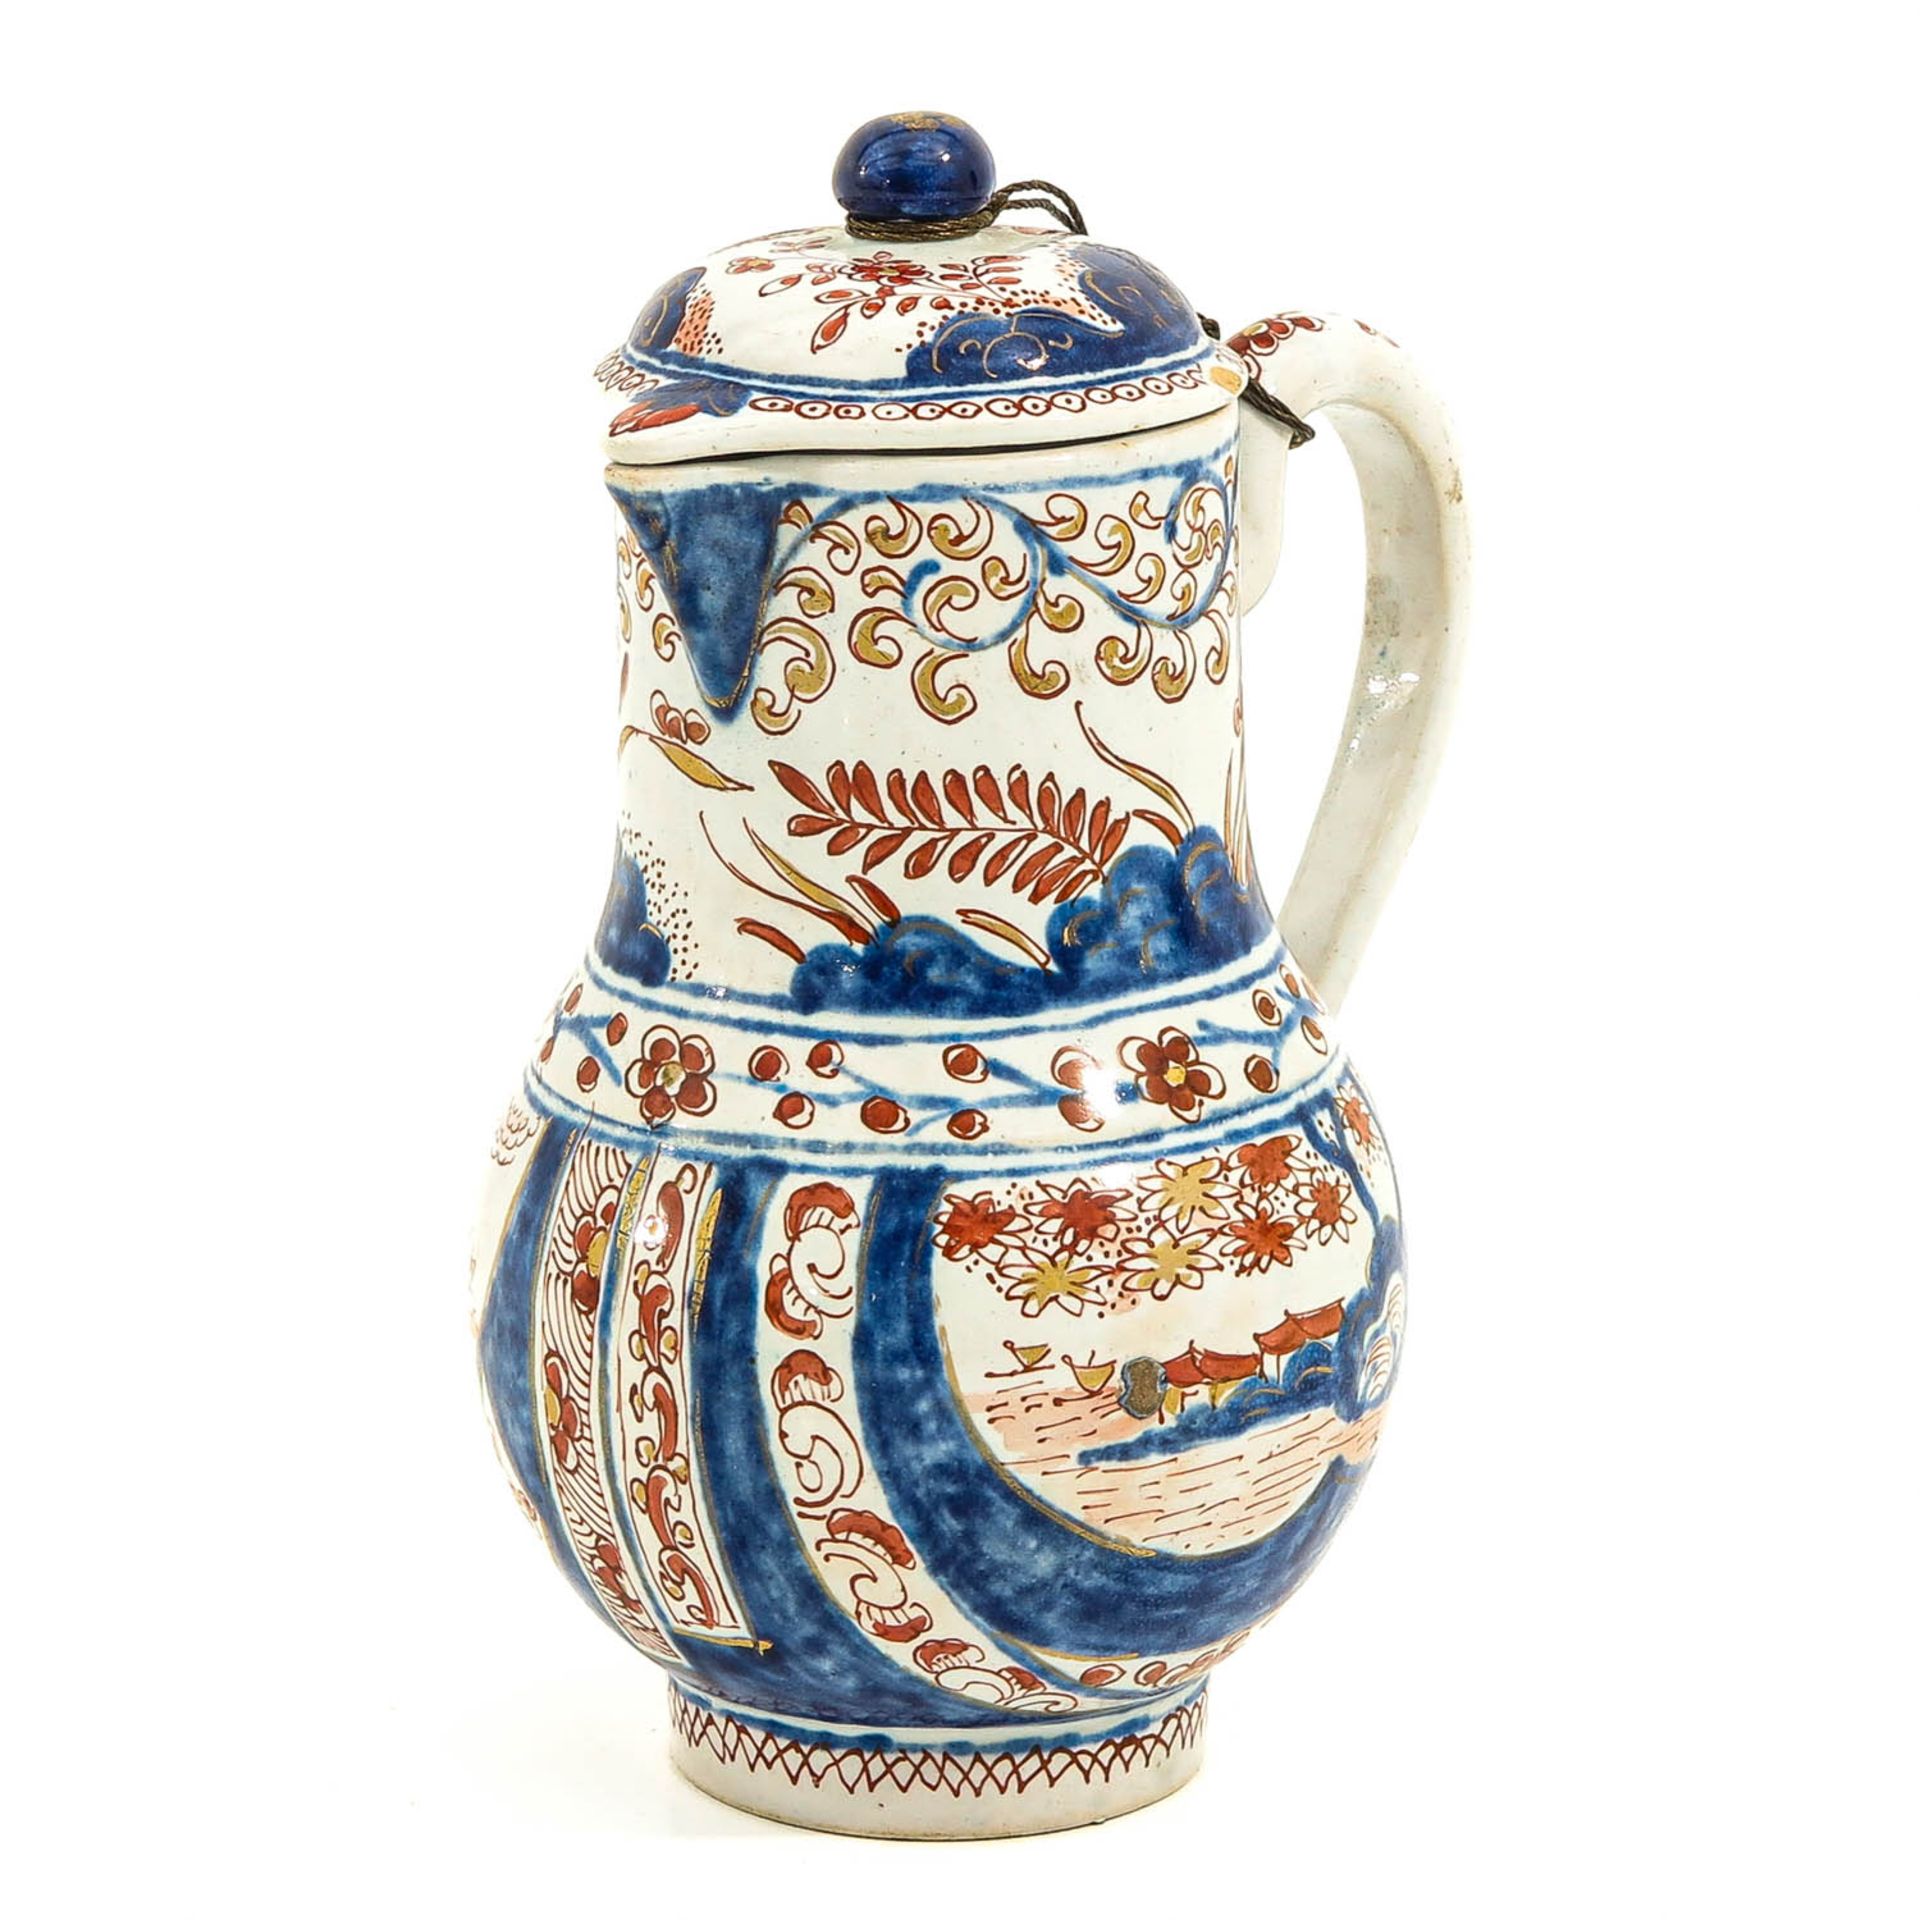 A European Pottery Jug